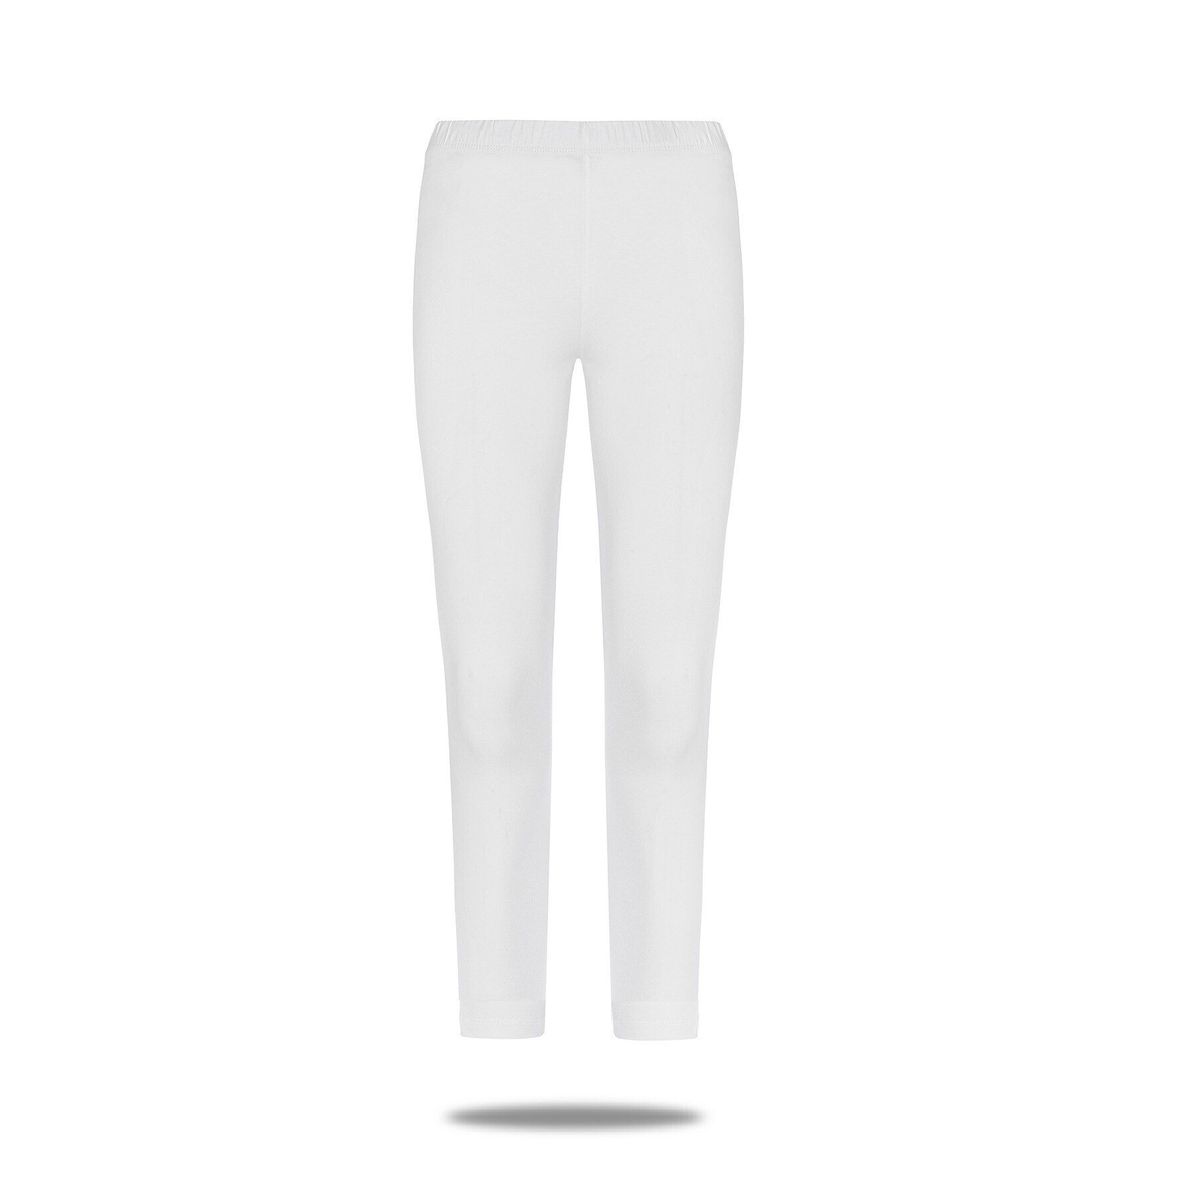 fsm1453 Women's Cotton Medium High Waist Thermal Lycra Leggings -4503-4101  - Trendyol